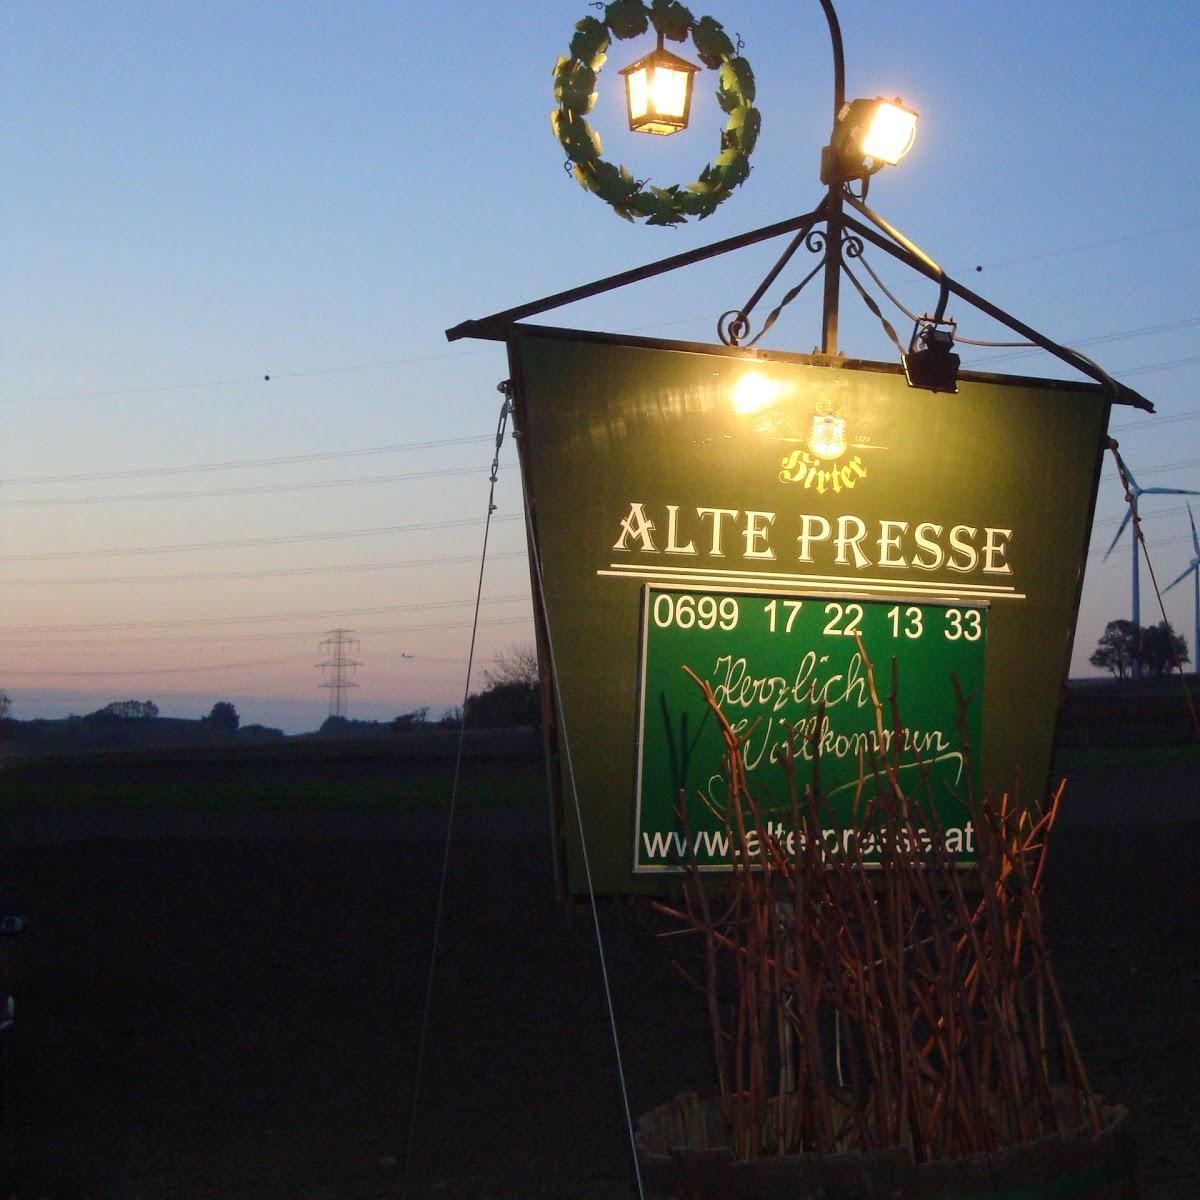 Restaurant "Alte Presse" in Sarasdorf